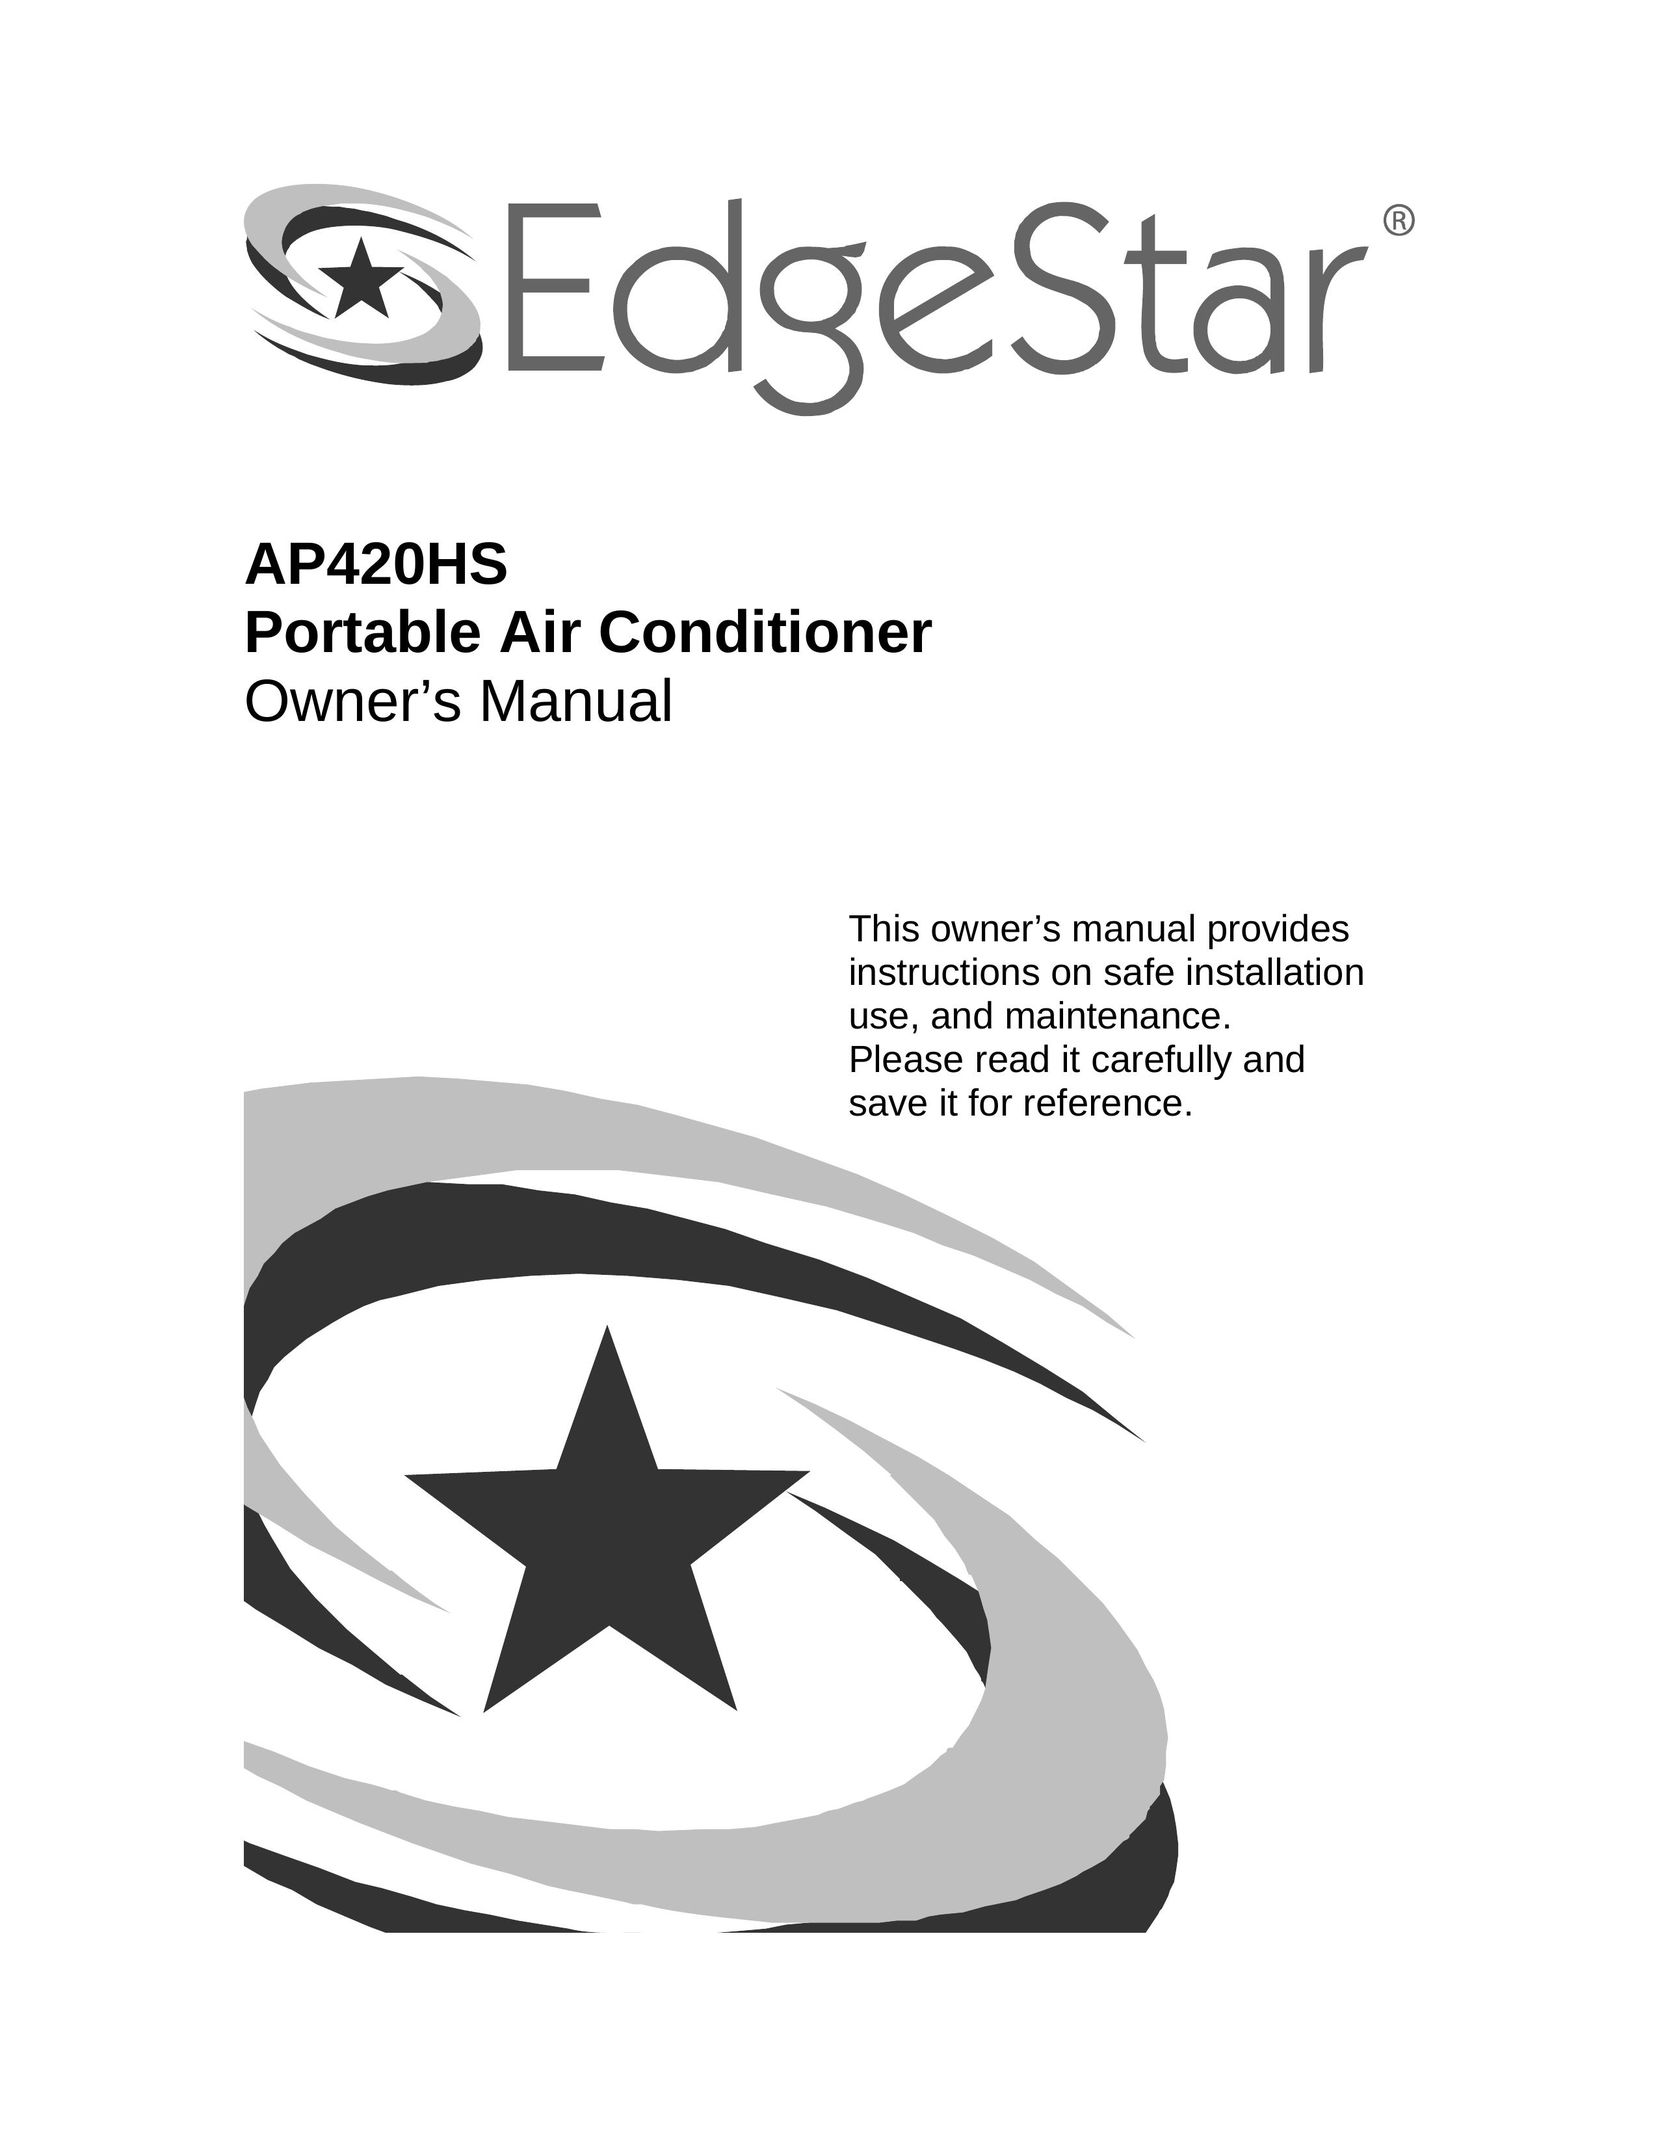 EdgeStar AP420HS Air Conditioner User Manual